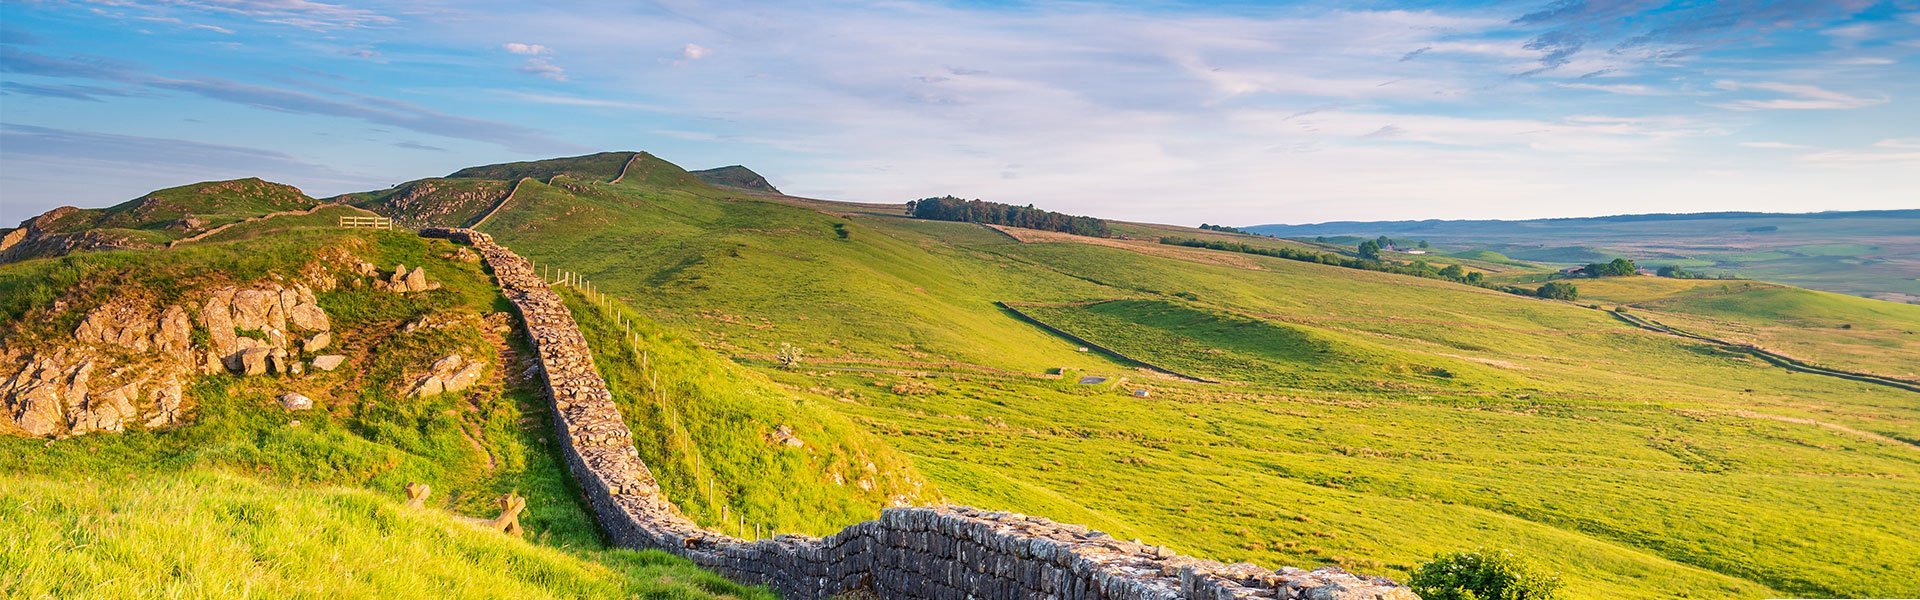 Hadrian's Wall in Schotland, Groot-Brittannië